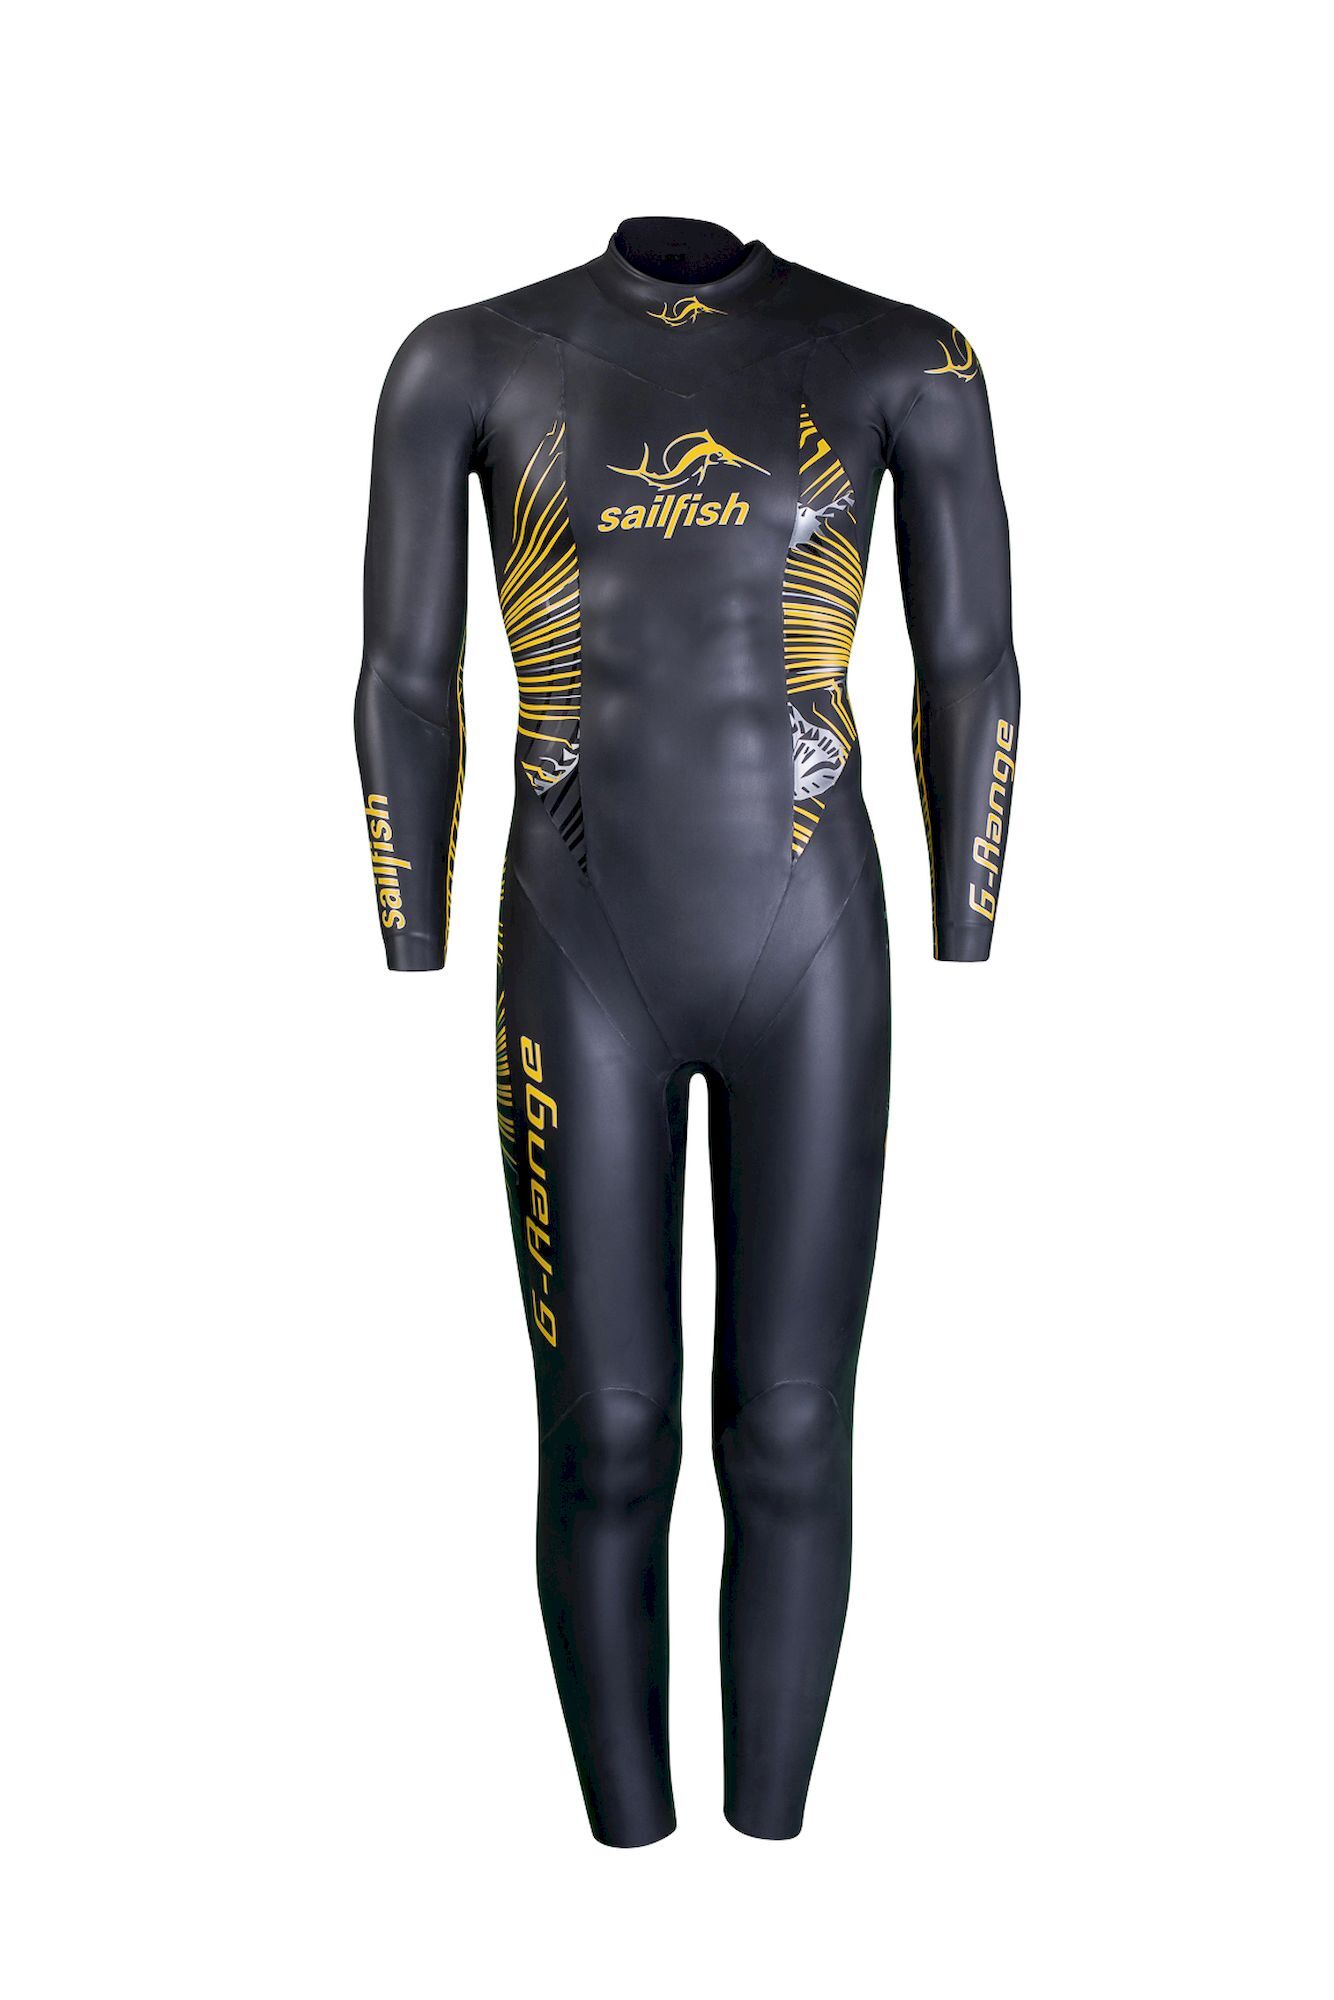 Sailfish Wetsuit Mens G-Range 8 - Trajes de neopreno - Hombre